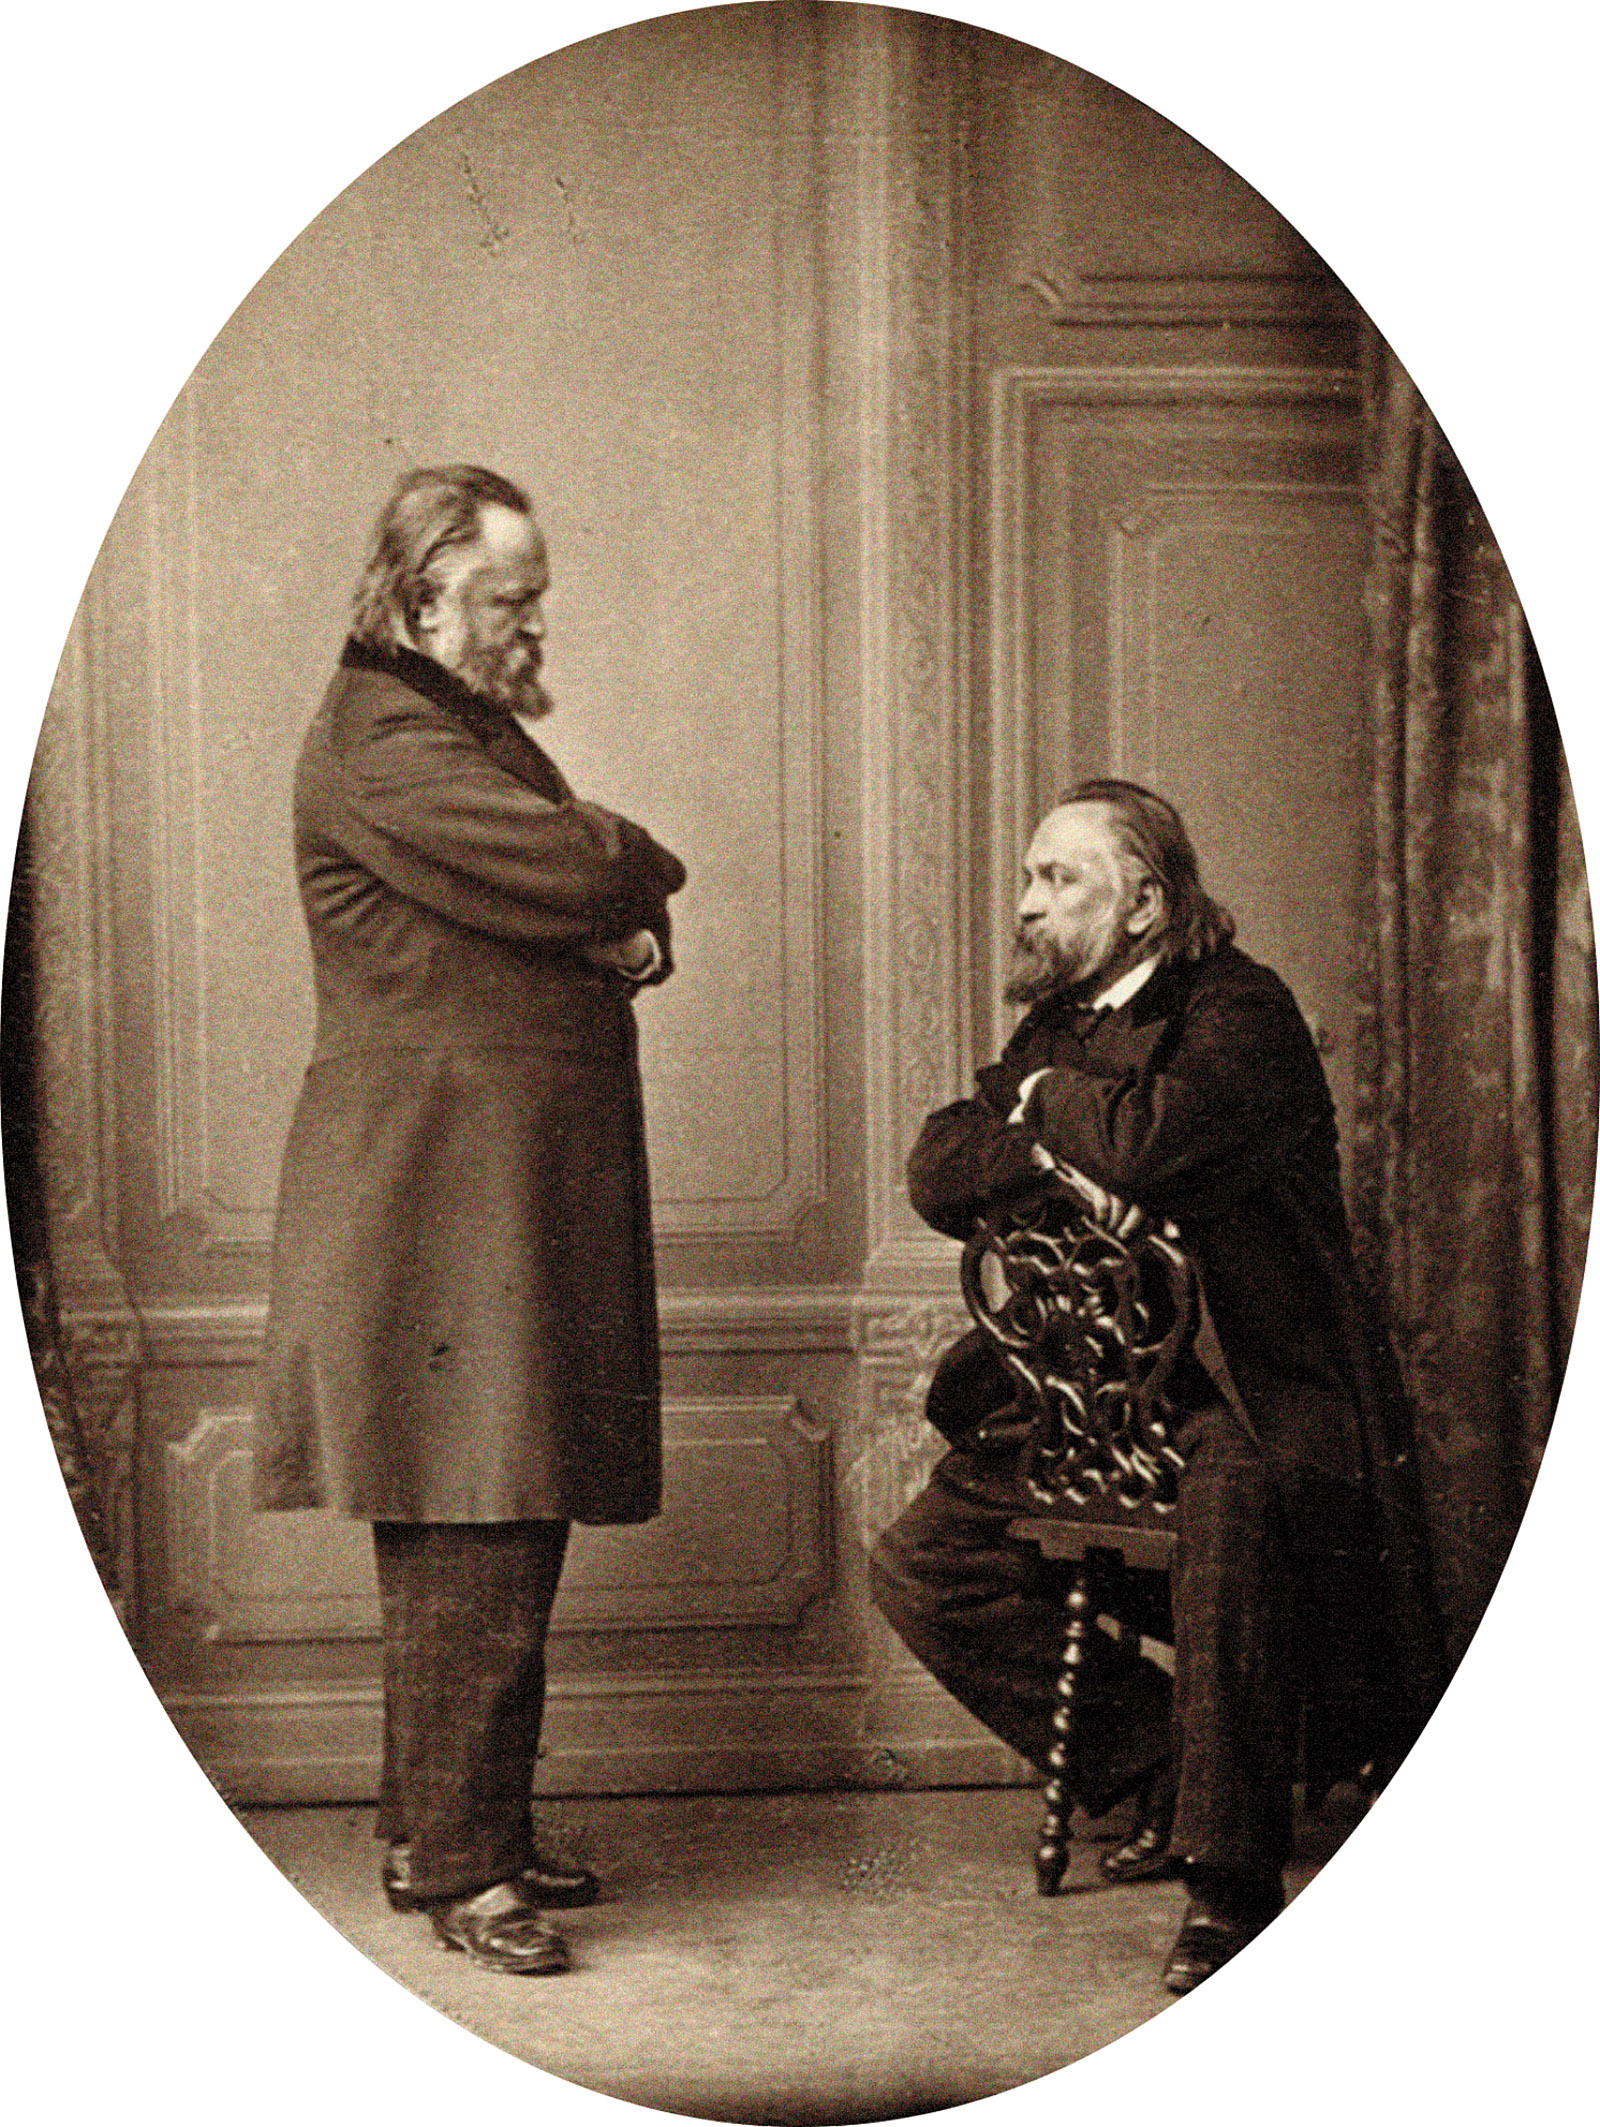 ‘Herzen Against Herzen’; photograph by Sergei Lvovich Levitsky, 1865